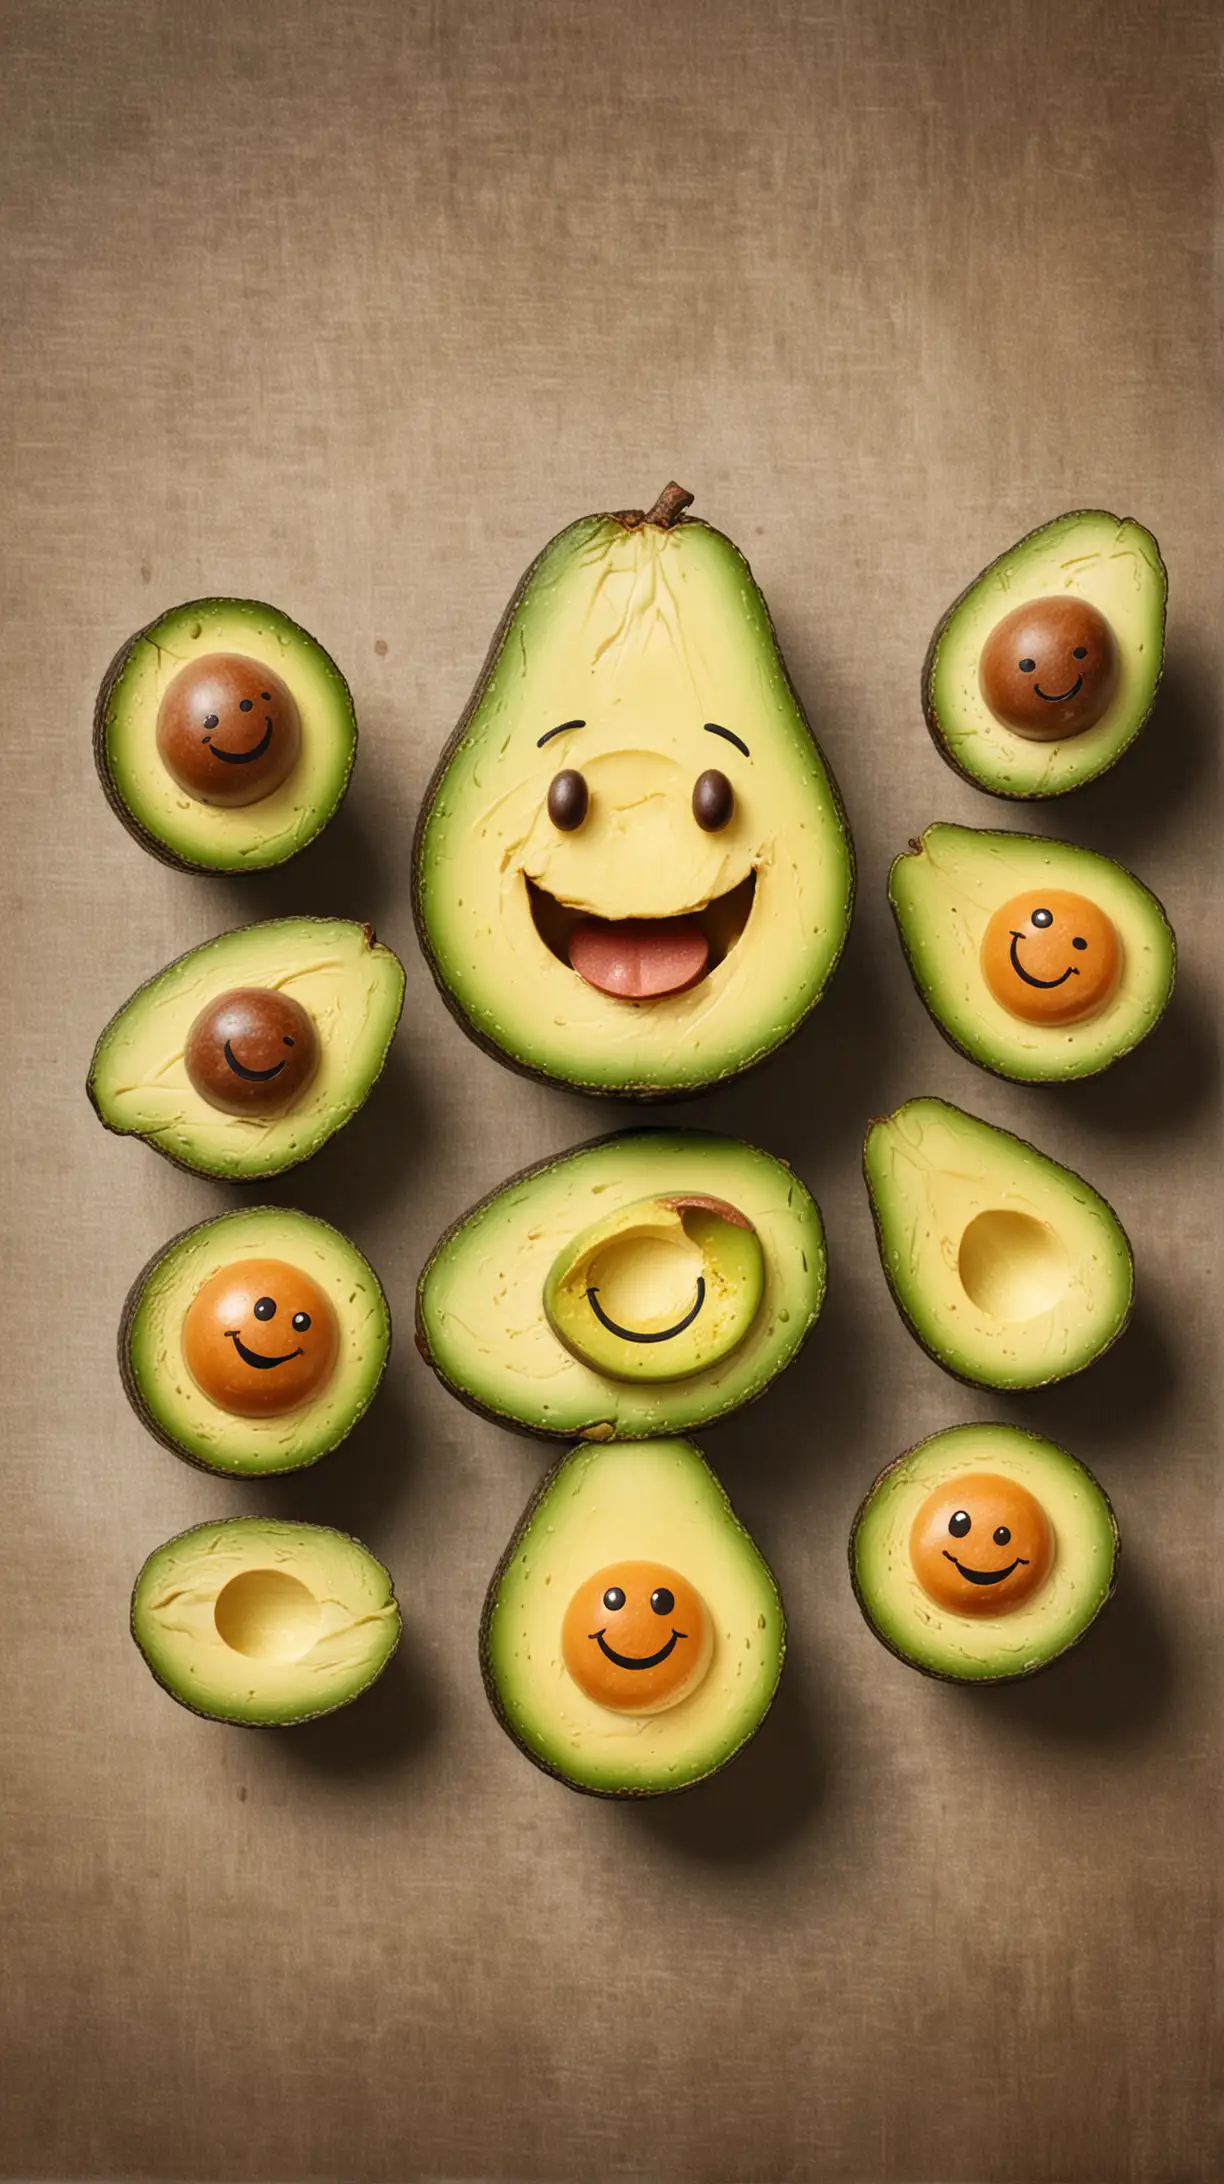 Avocado Happiness Joyful Mood Symbols with Smiling Avocados